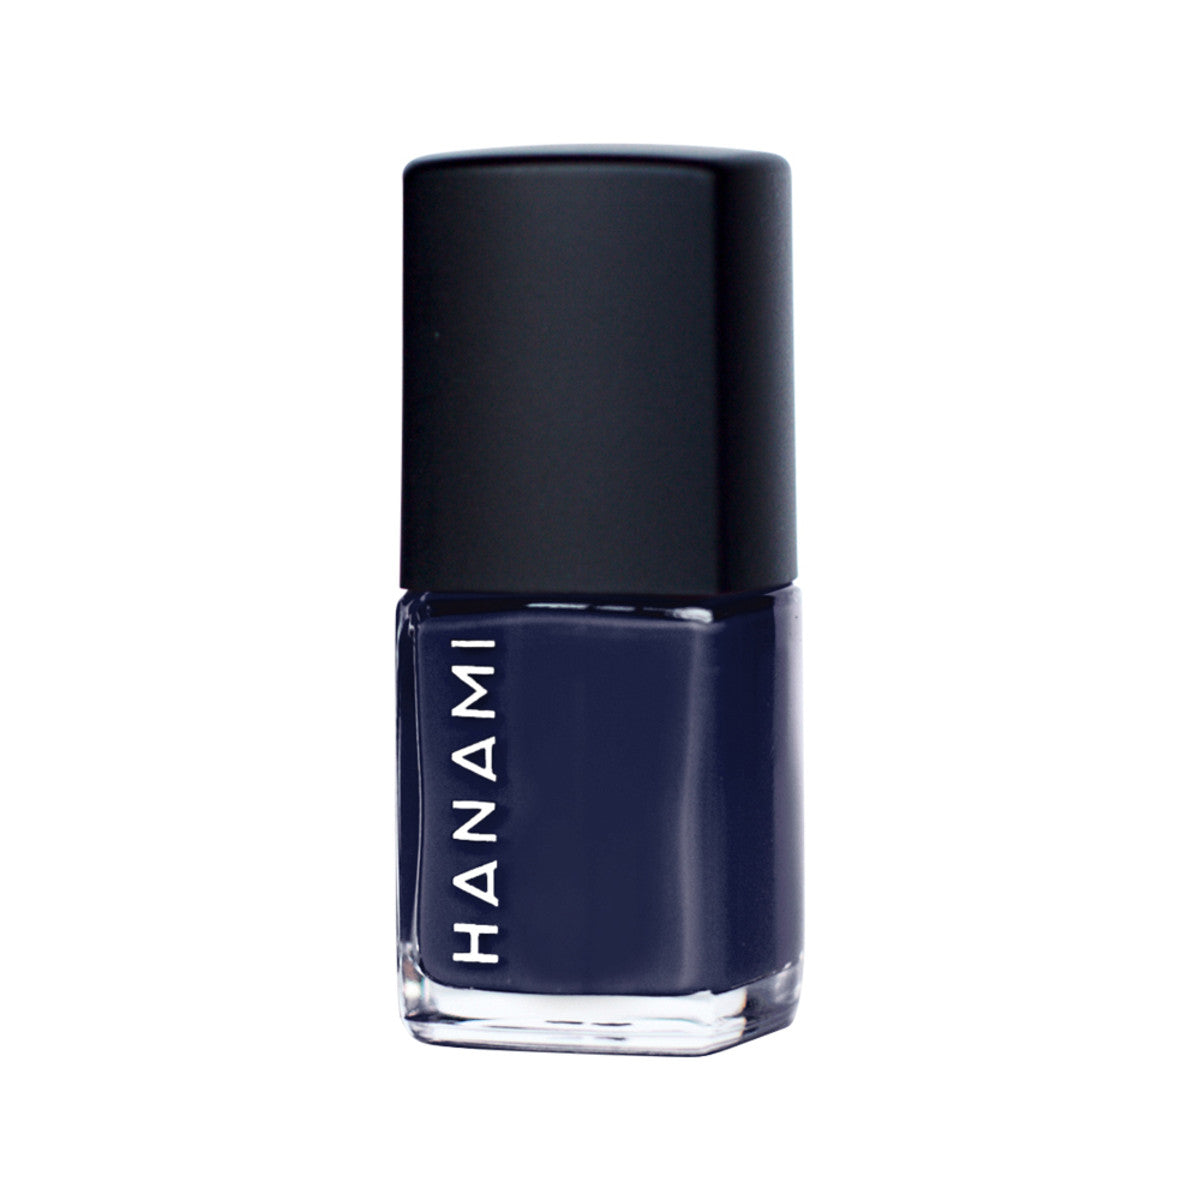 Hanami - Nail Polish Ophelia 15ml